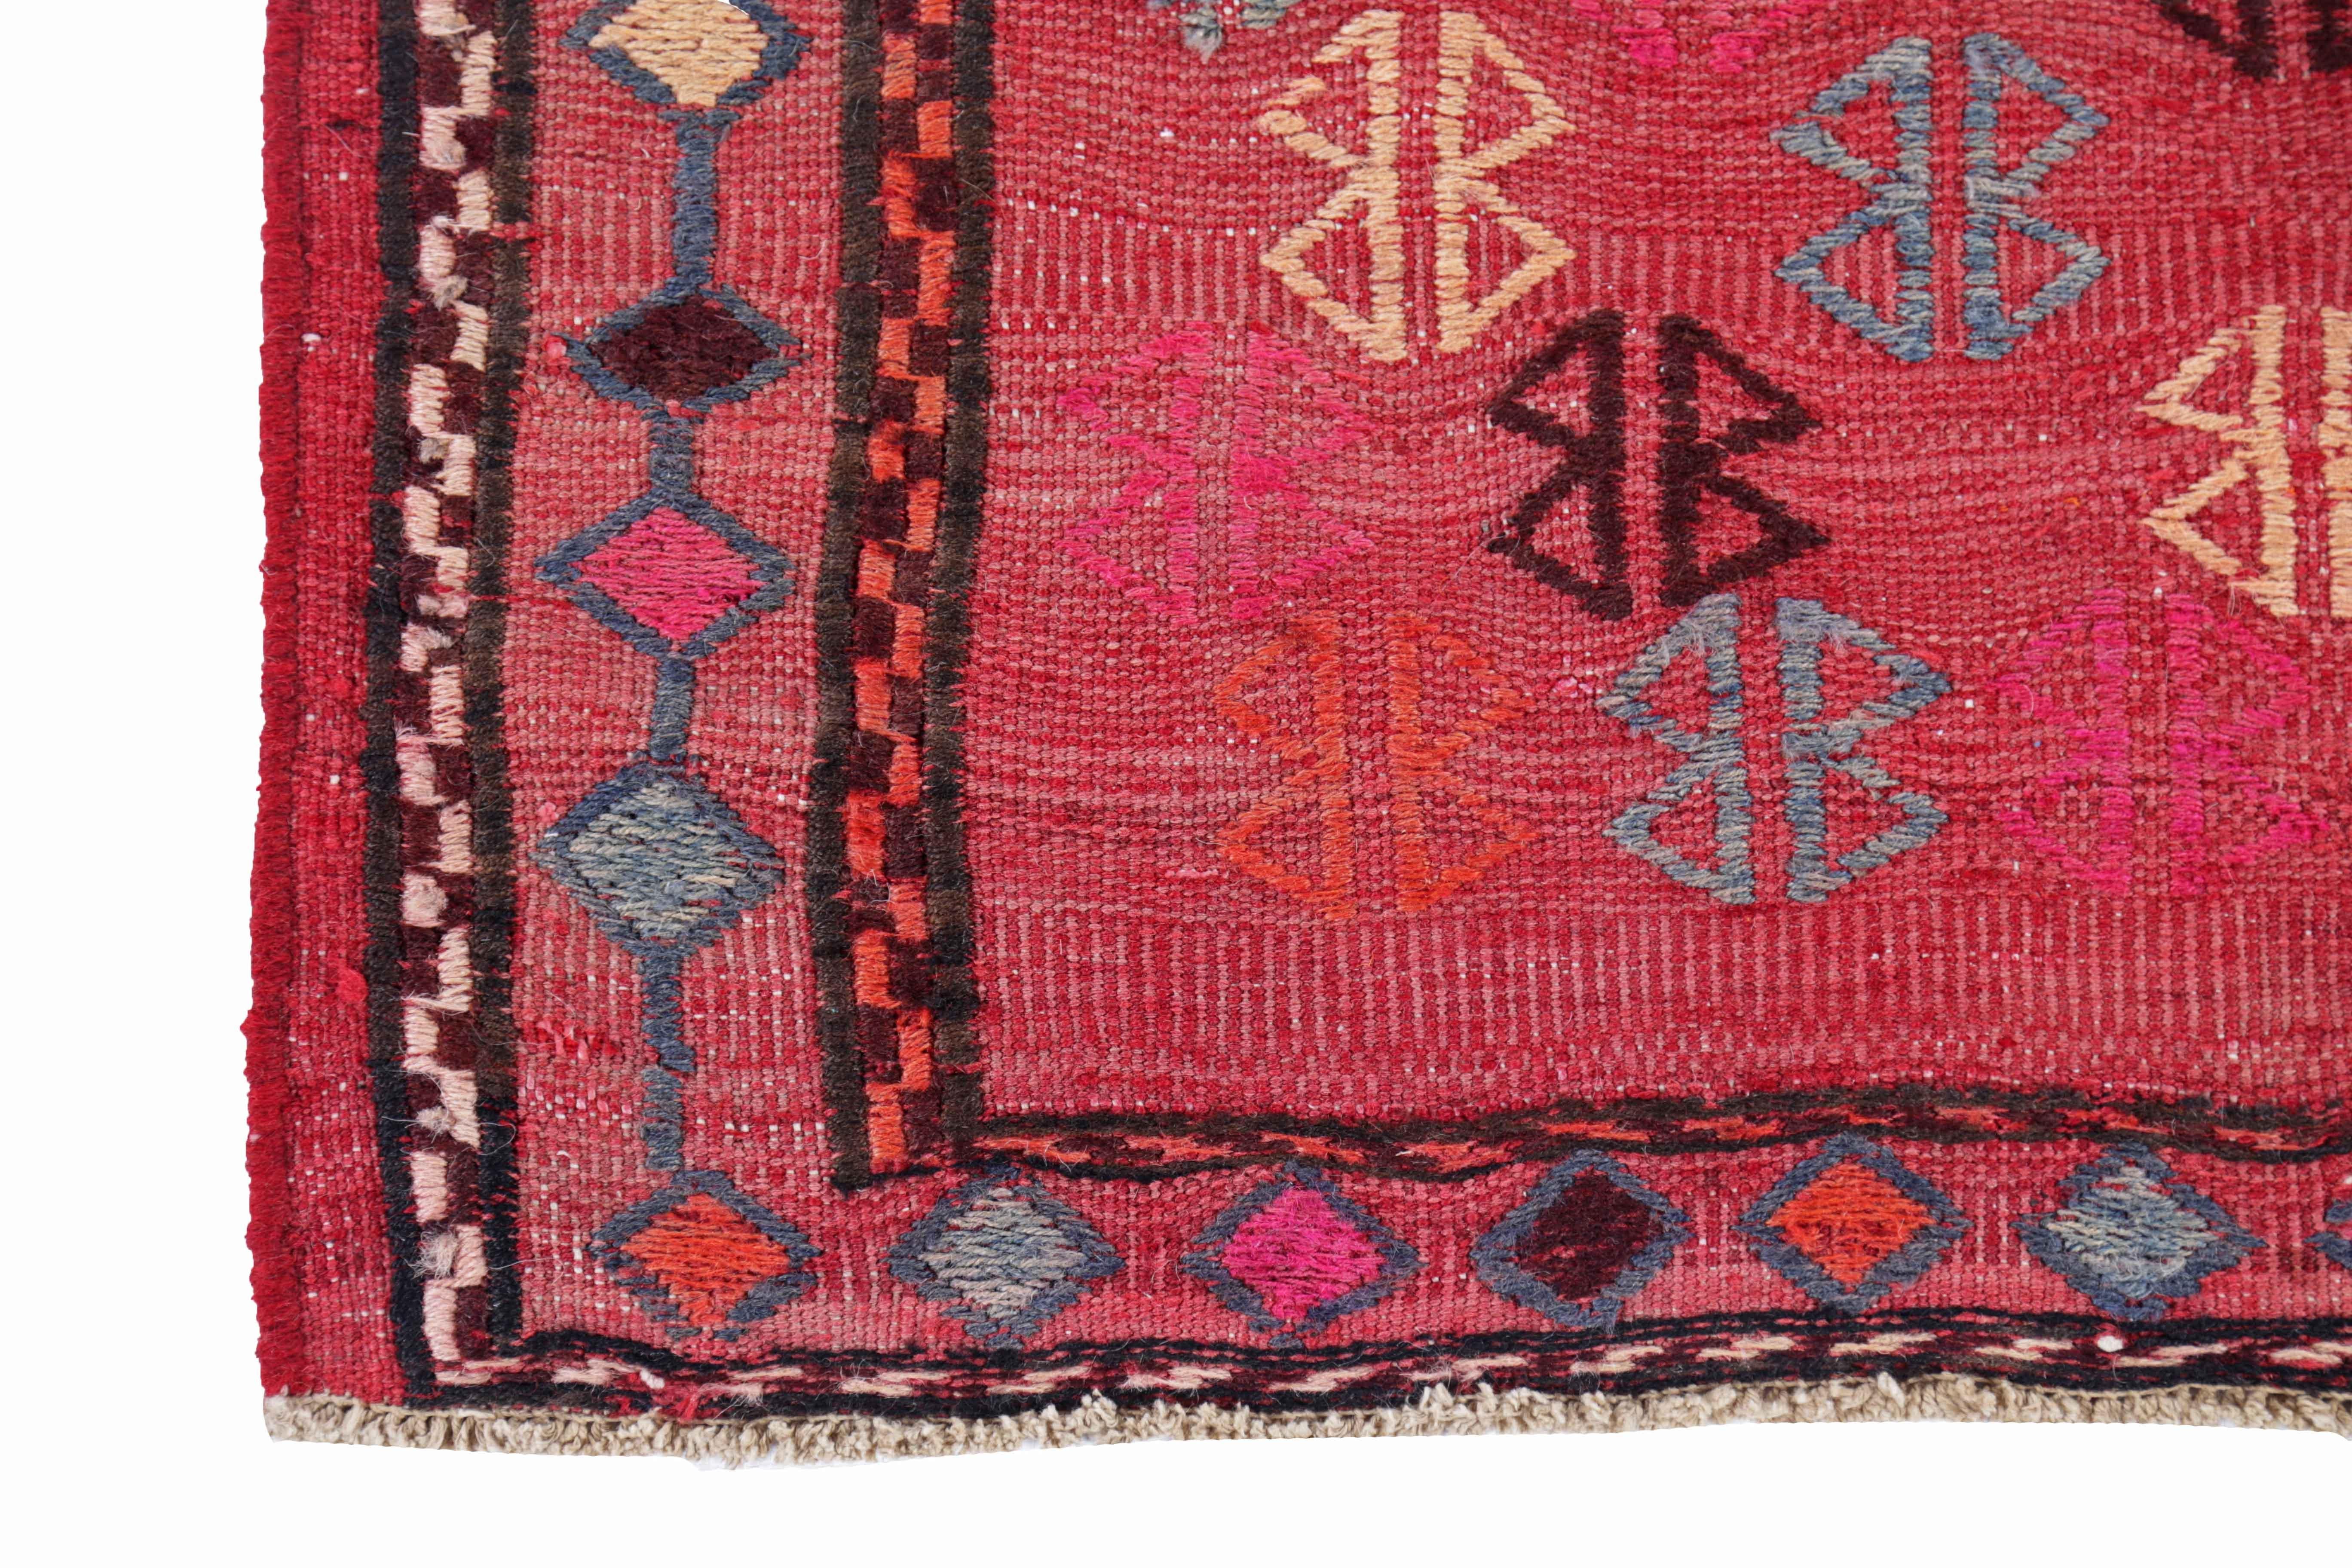 Hand-Woven Antique Persian Square Rug Kilim Design For Sale